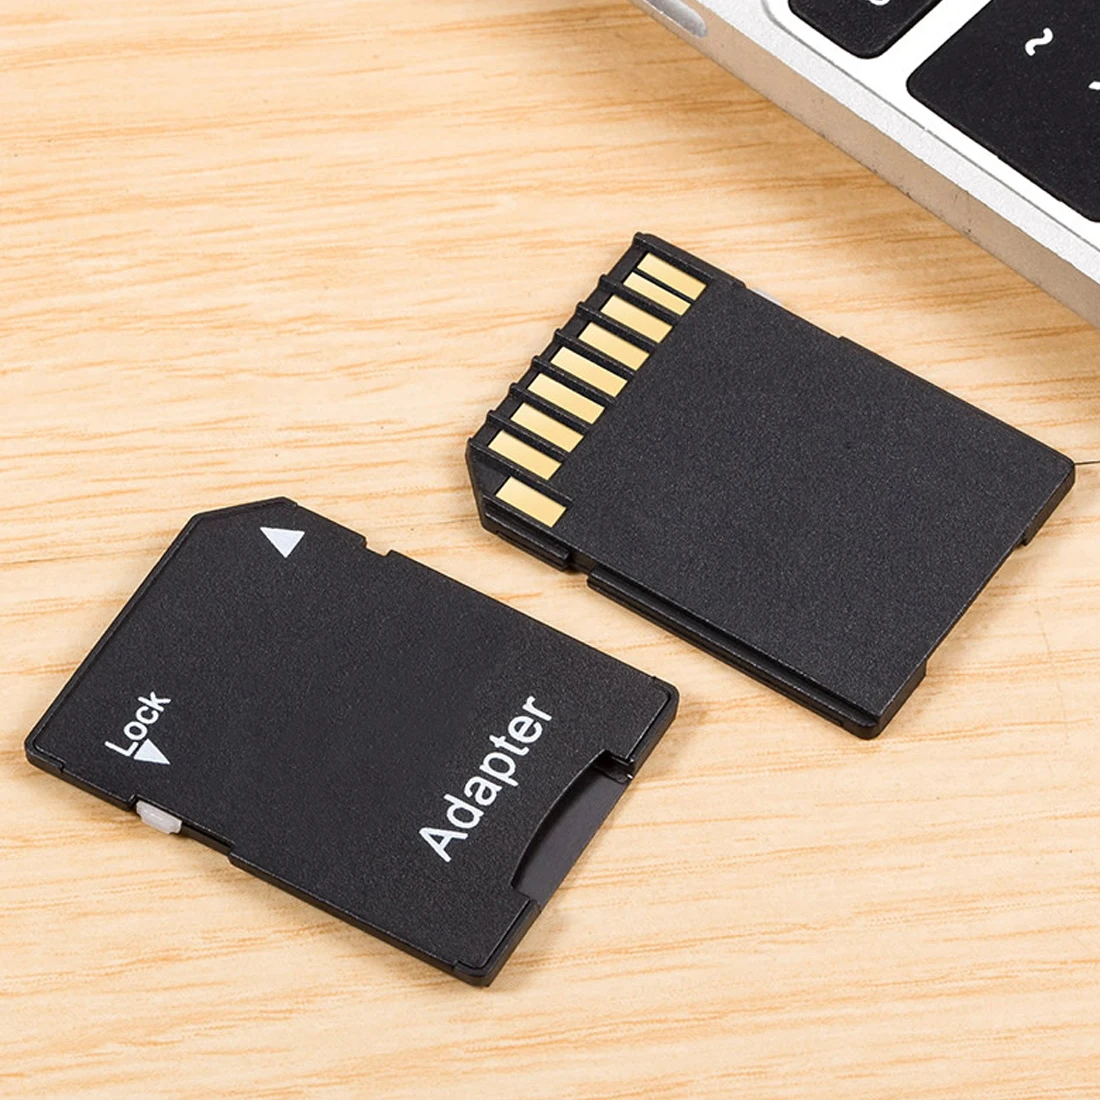 NOYOKERE 2 шт. Популярные Флэшка MicroSD TF для SD SDHC карты памяти адаптер преобразовать в SD карты